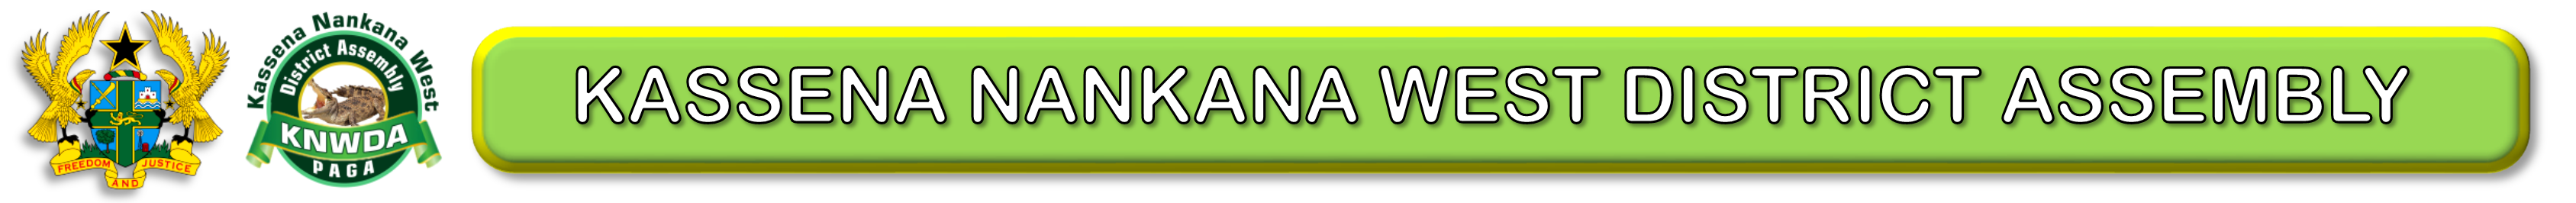 Kassena Nankana West District Assembly Logo